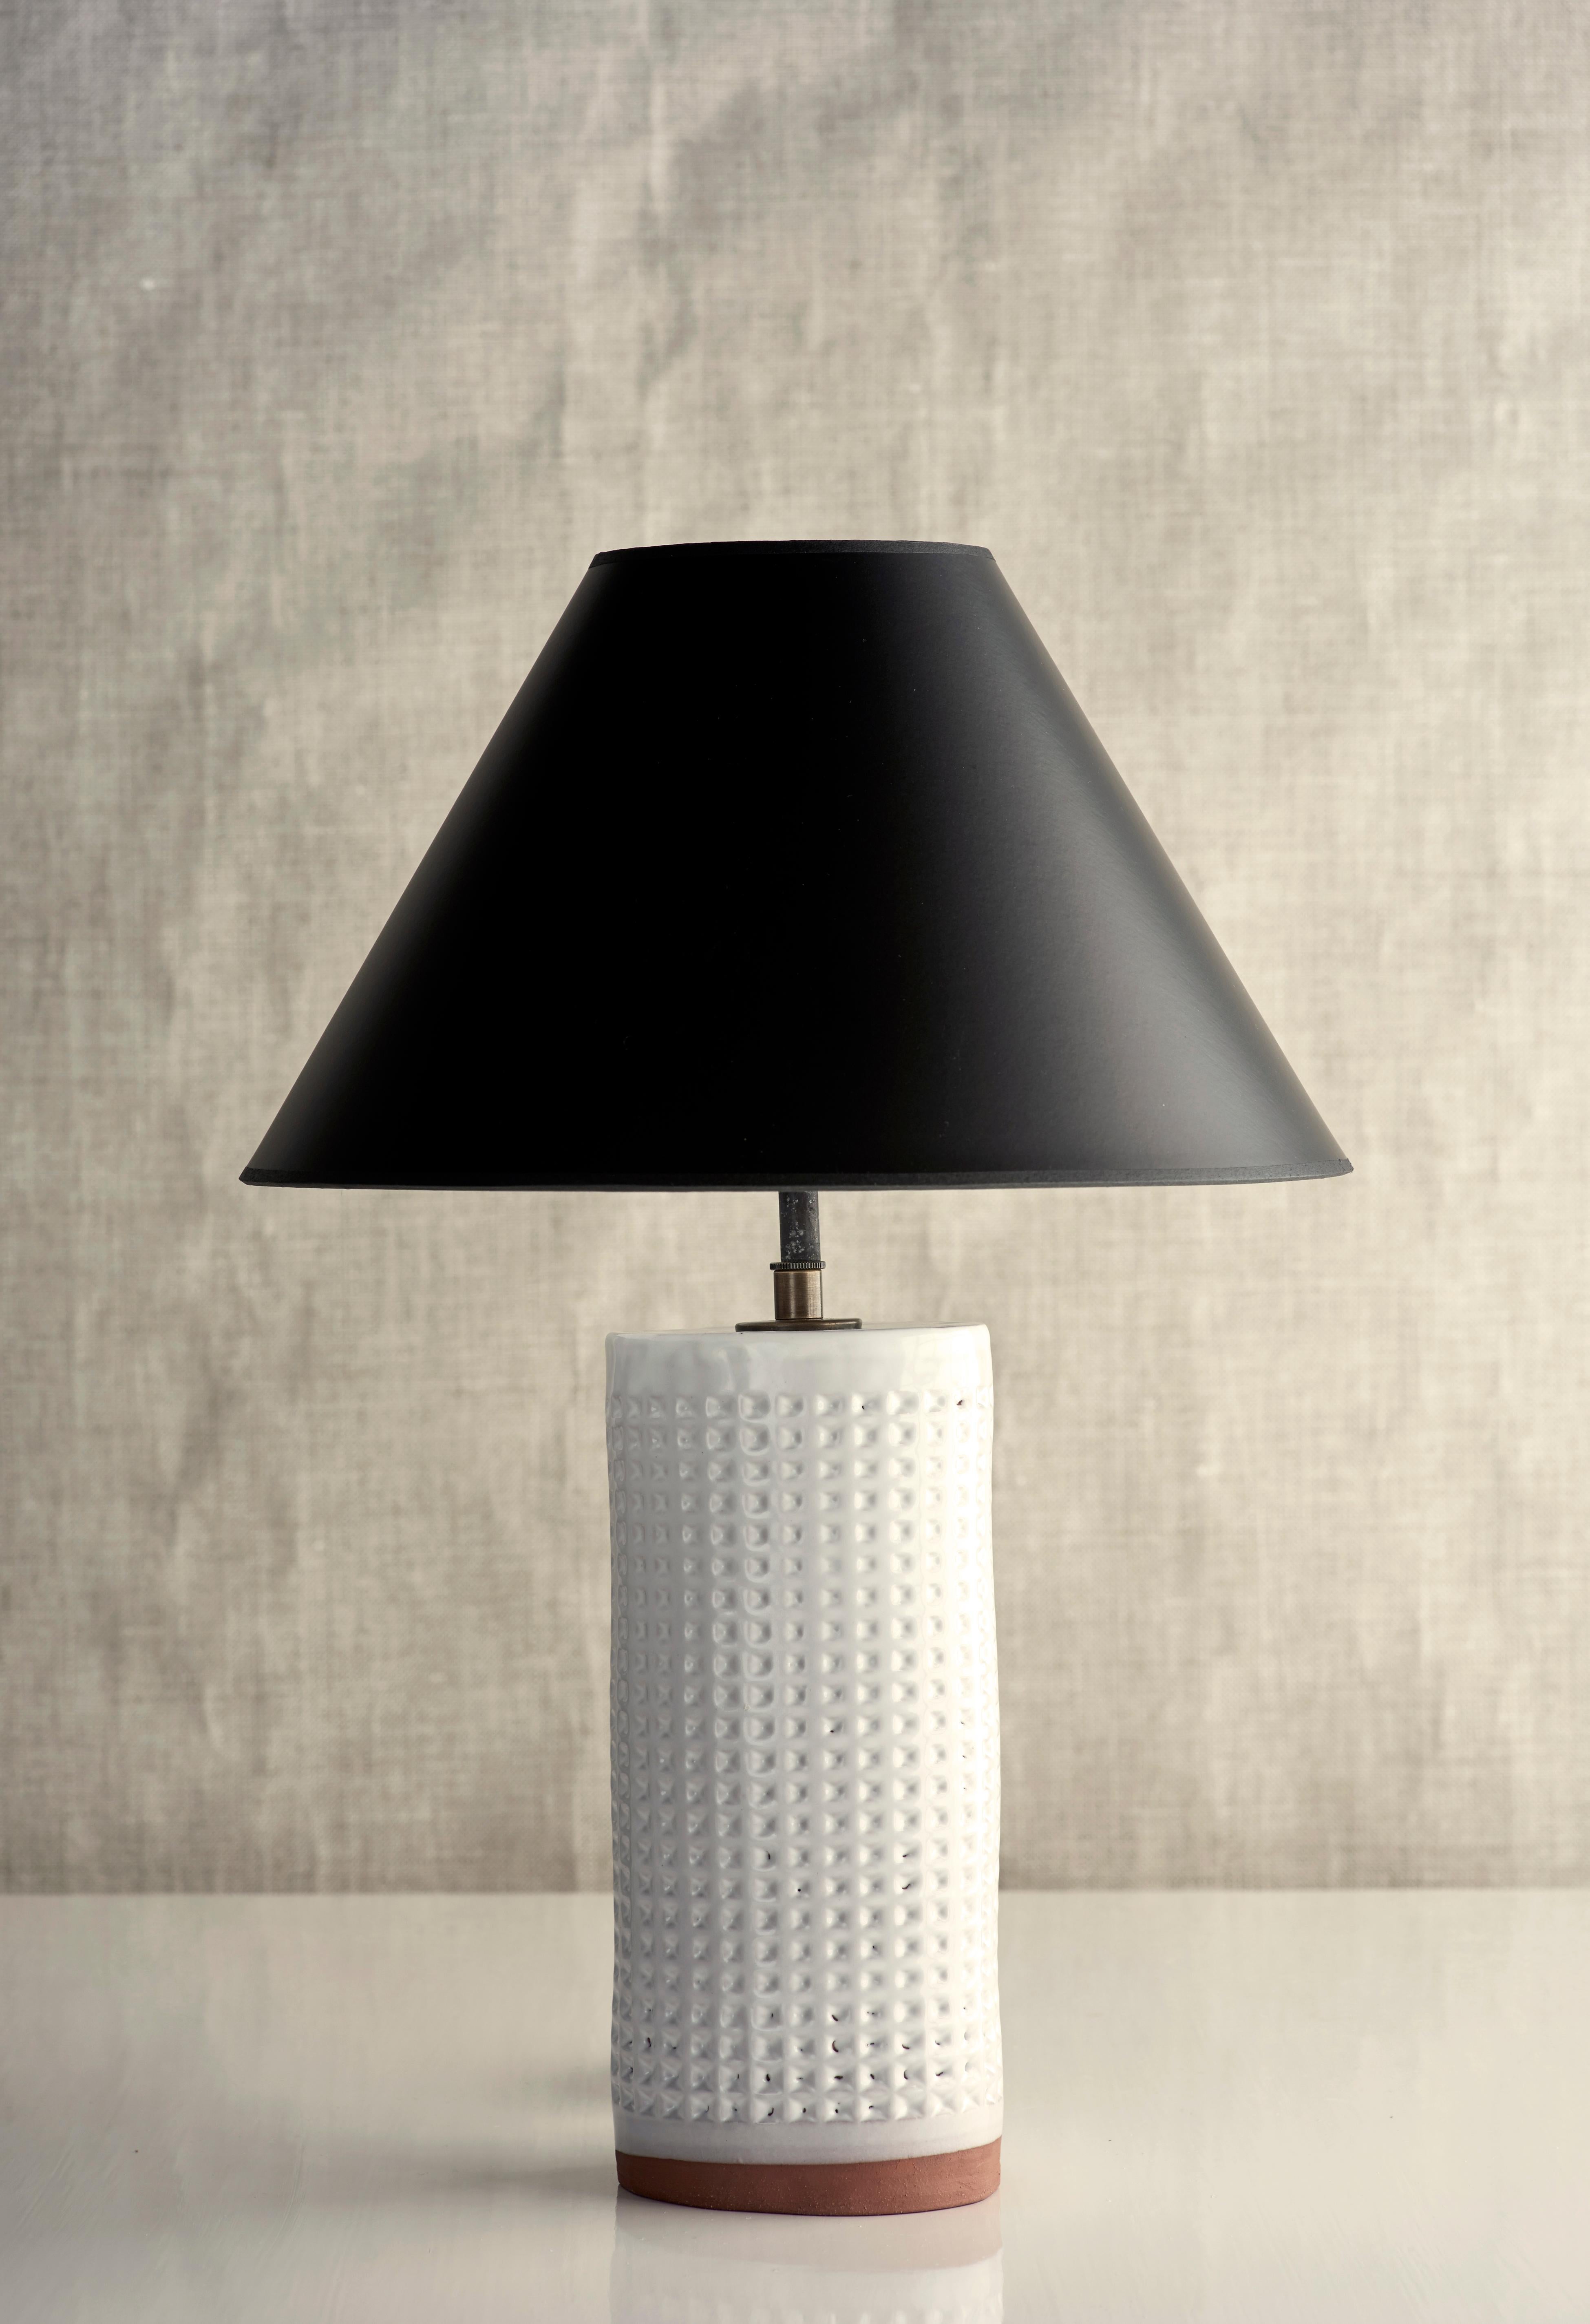 American Nammos Lamp, Ceramic Sculptural Table Lamp by Dumais Made